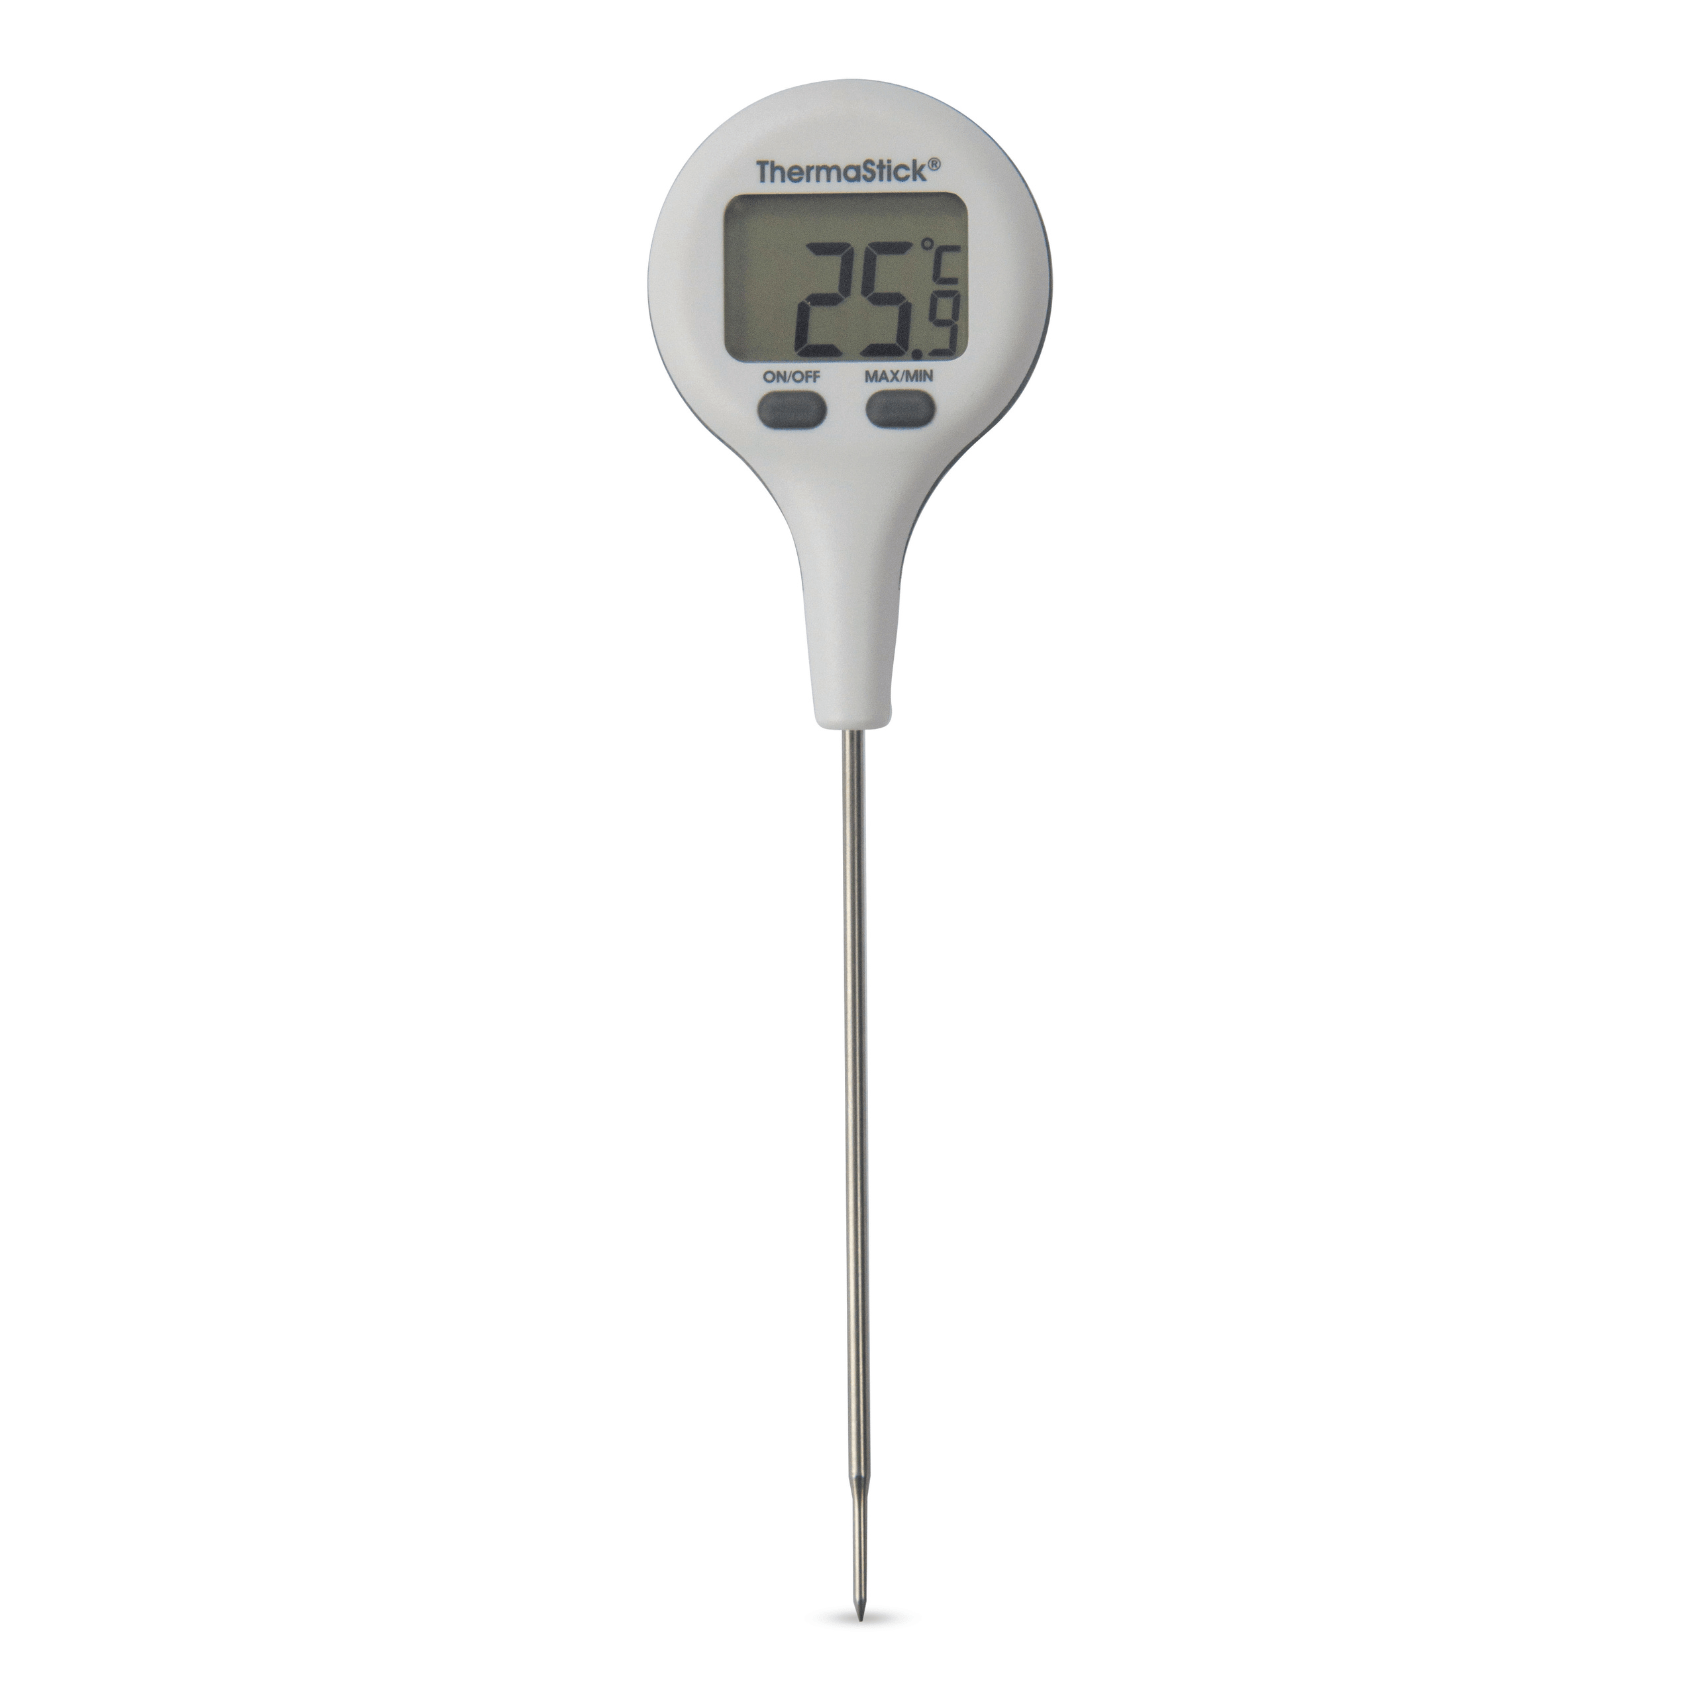 Thermometre.fr Thermomètres de poche ThermaStick sur fond blanc.